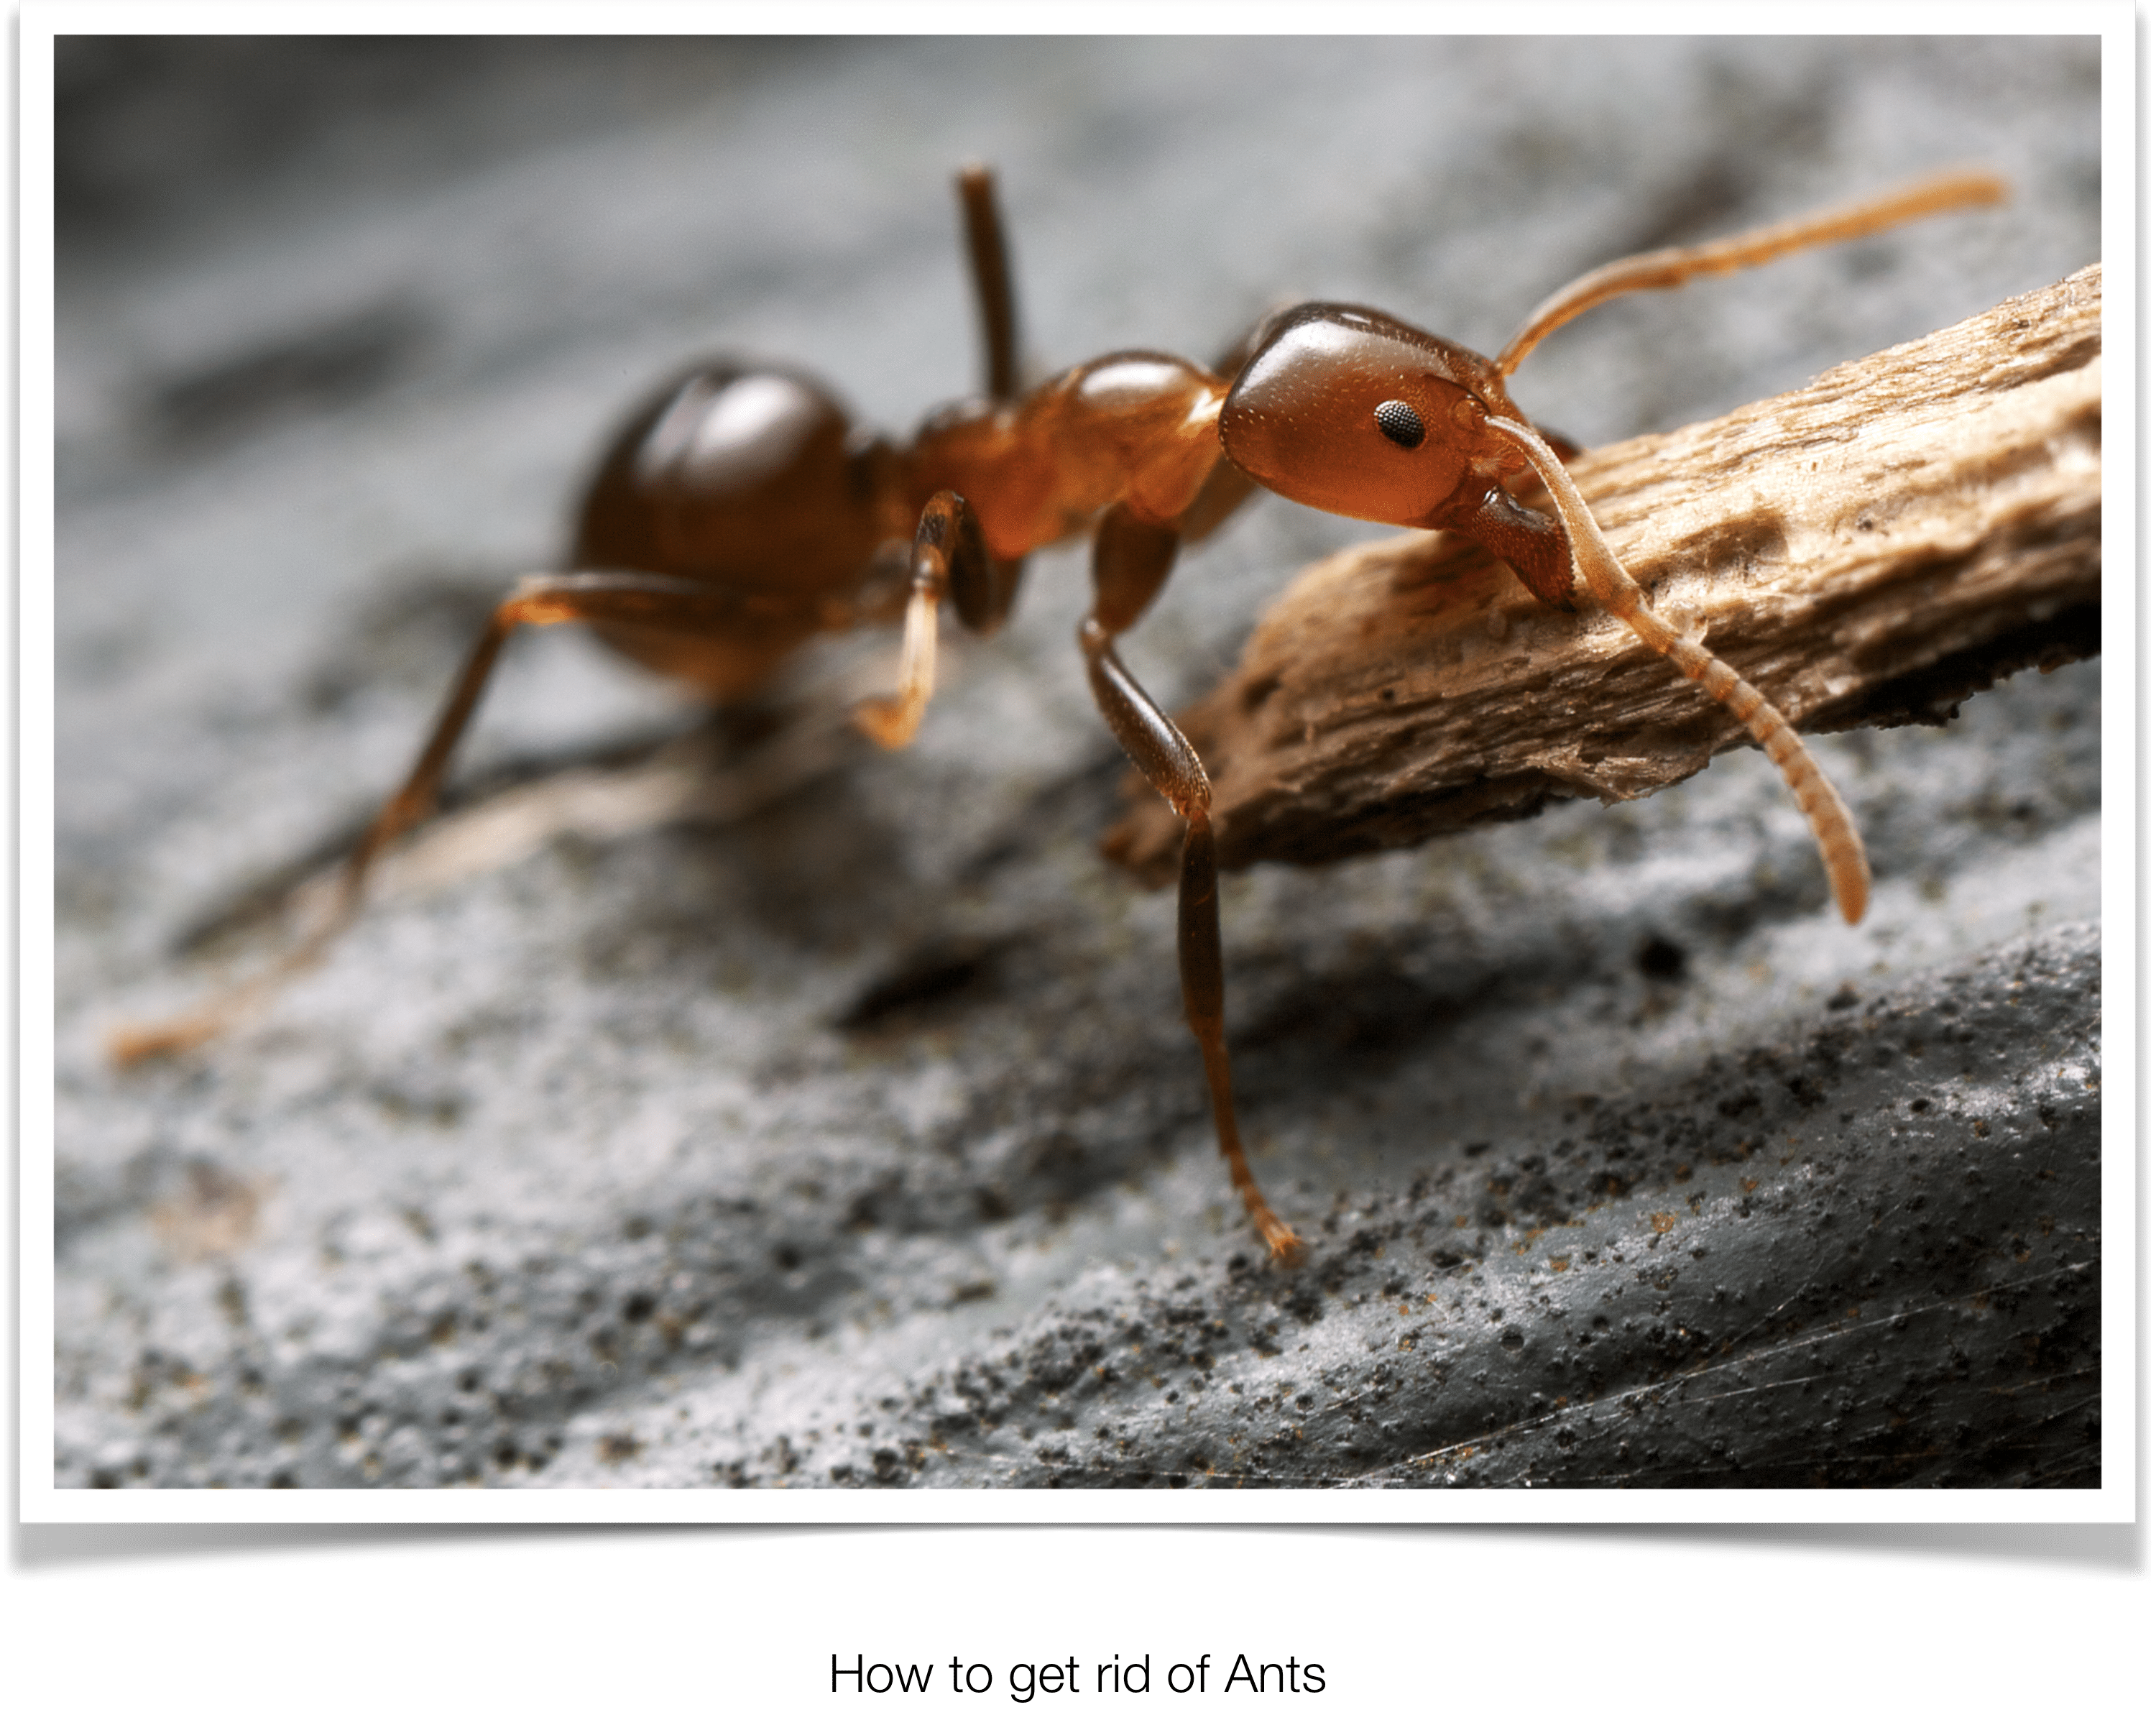 Let us help get rid of Summer Ants